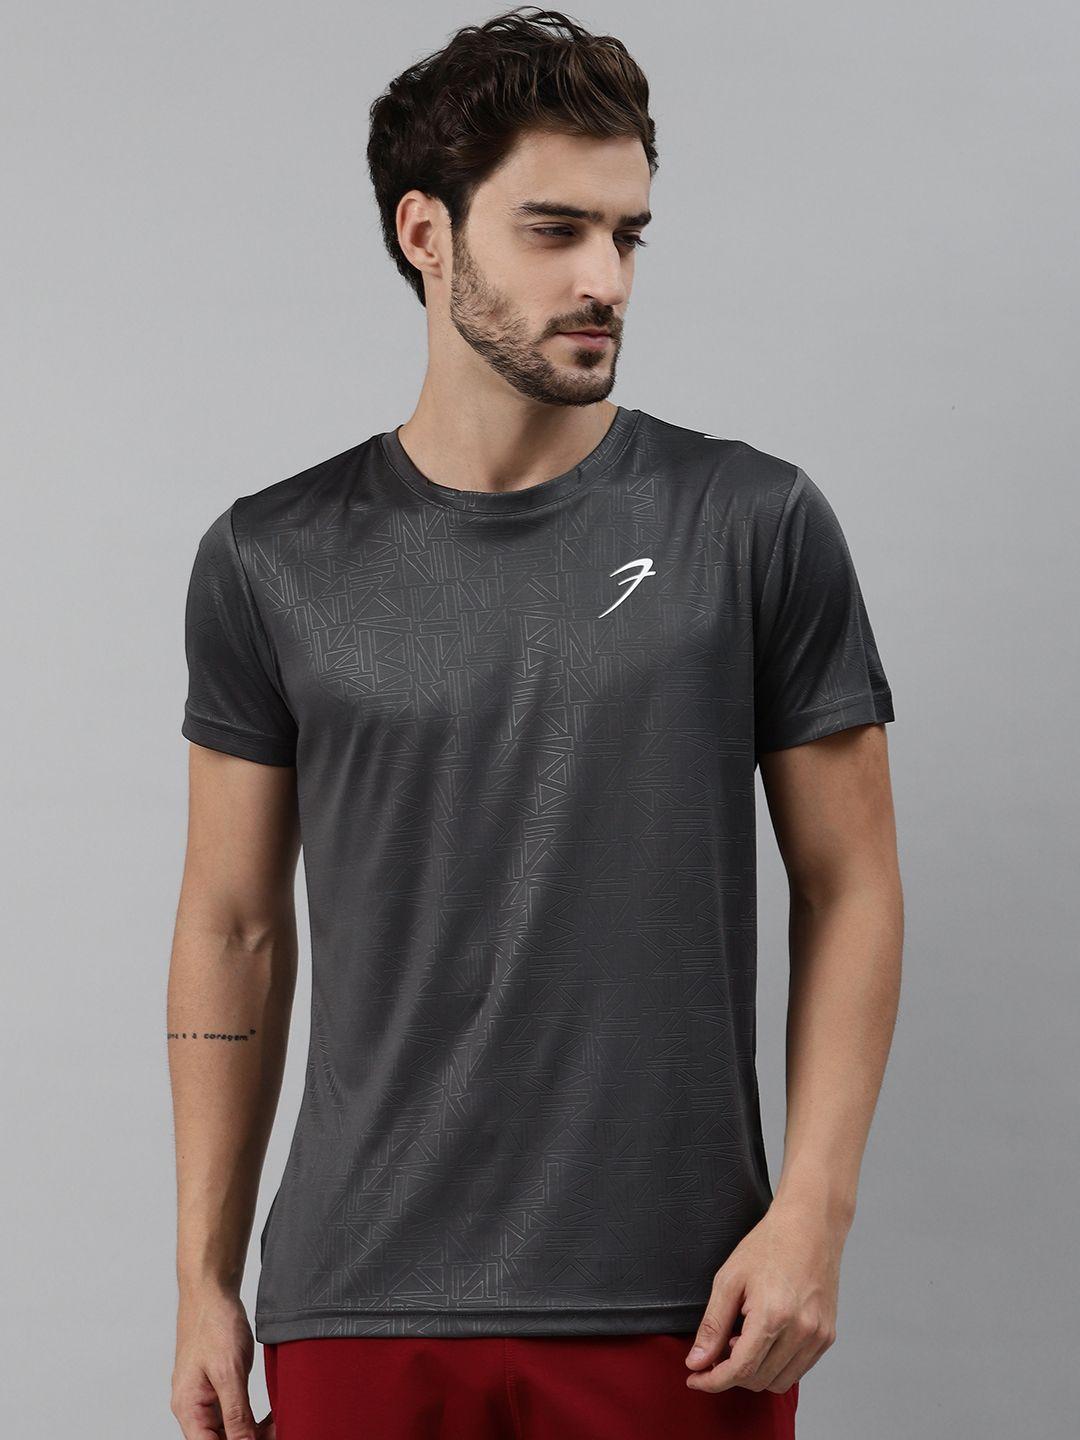 fuaark-men-charcoal-grey-slim-fit-geometric-print-round-neck-training-t-shirt